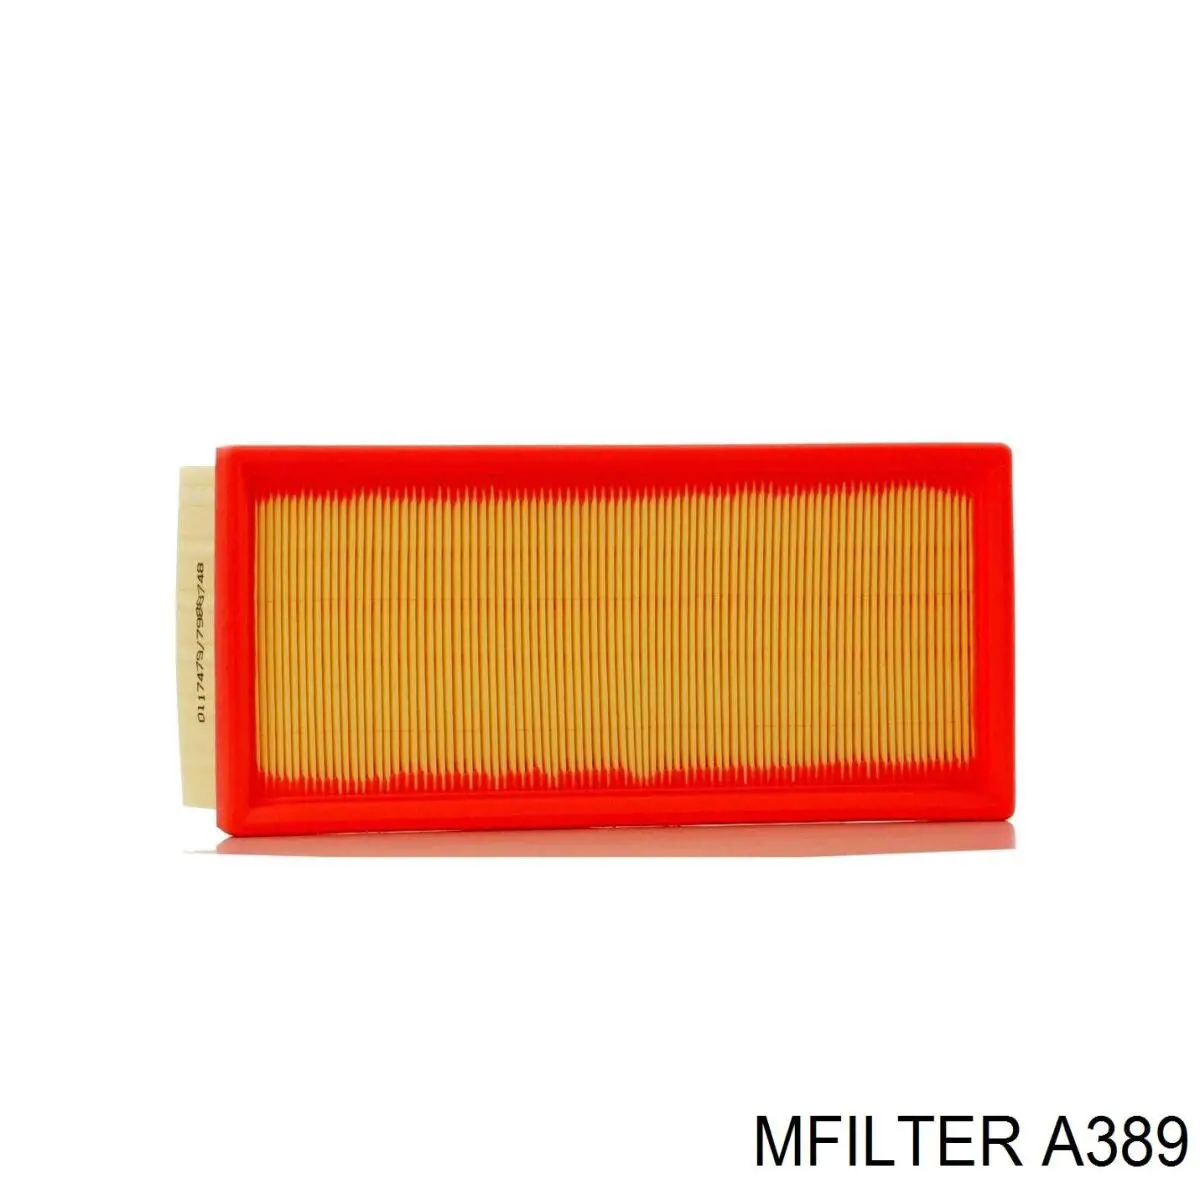 A389 Mfilter filtro de aire